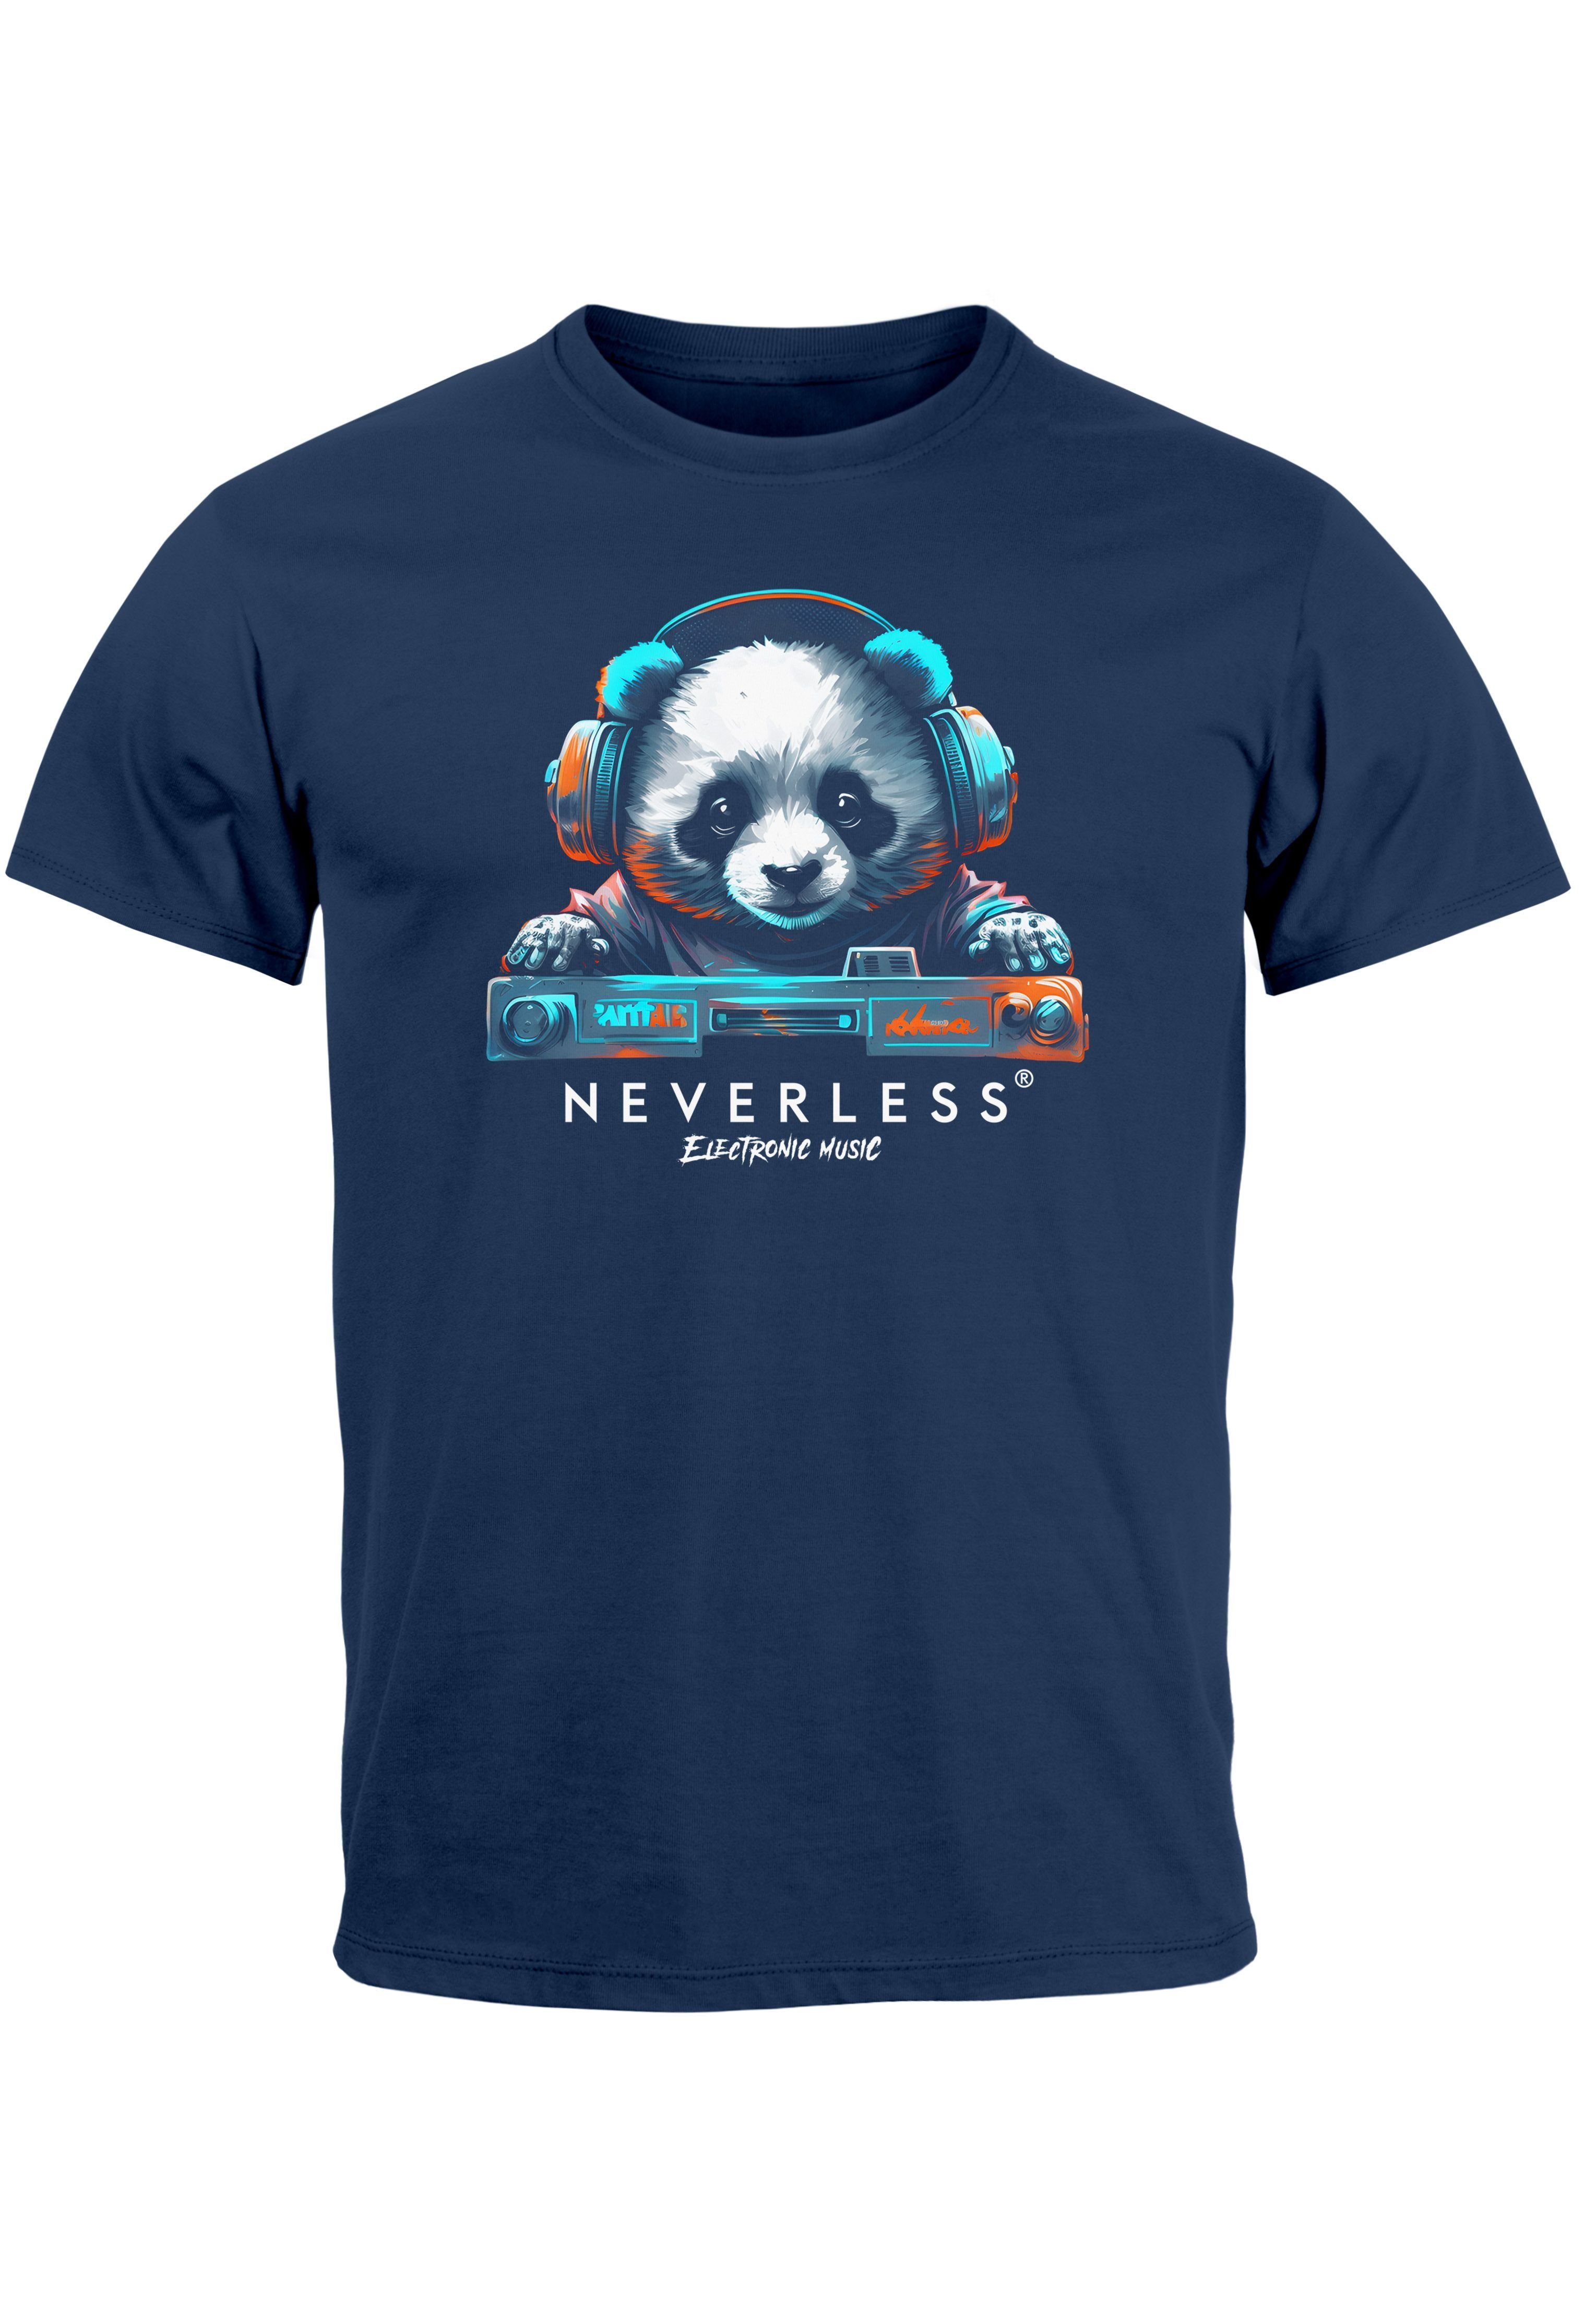 Neverless Print-Shirt Herren T-Shirt Panda Bär Aufdruck Tiermotiv Musik Techo Print Fashion mit Print navy